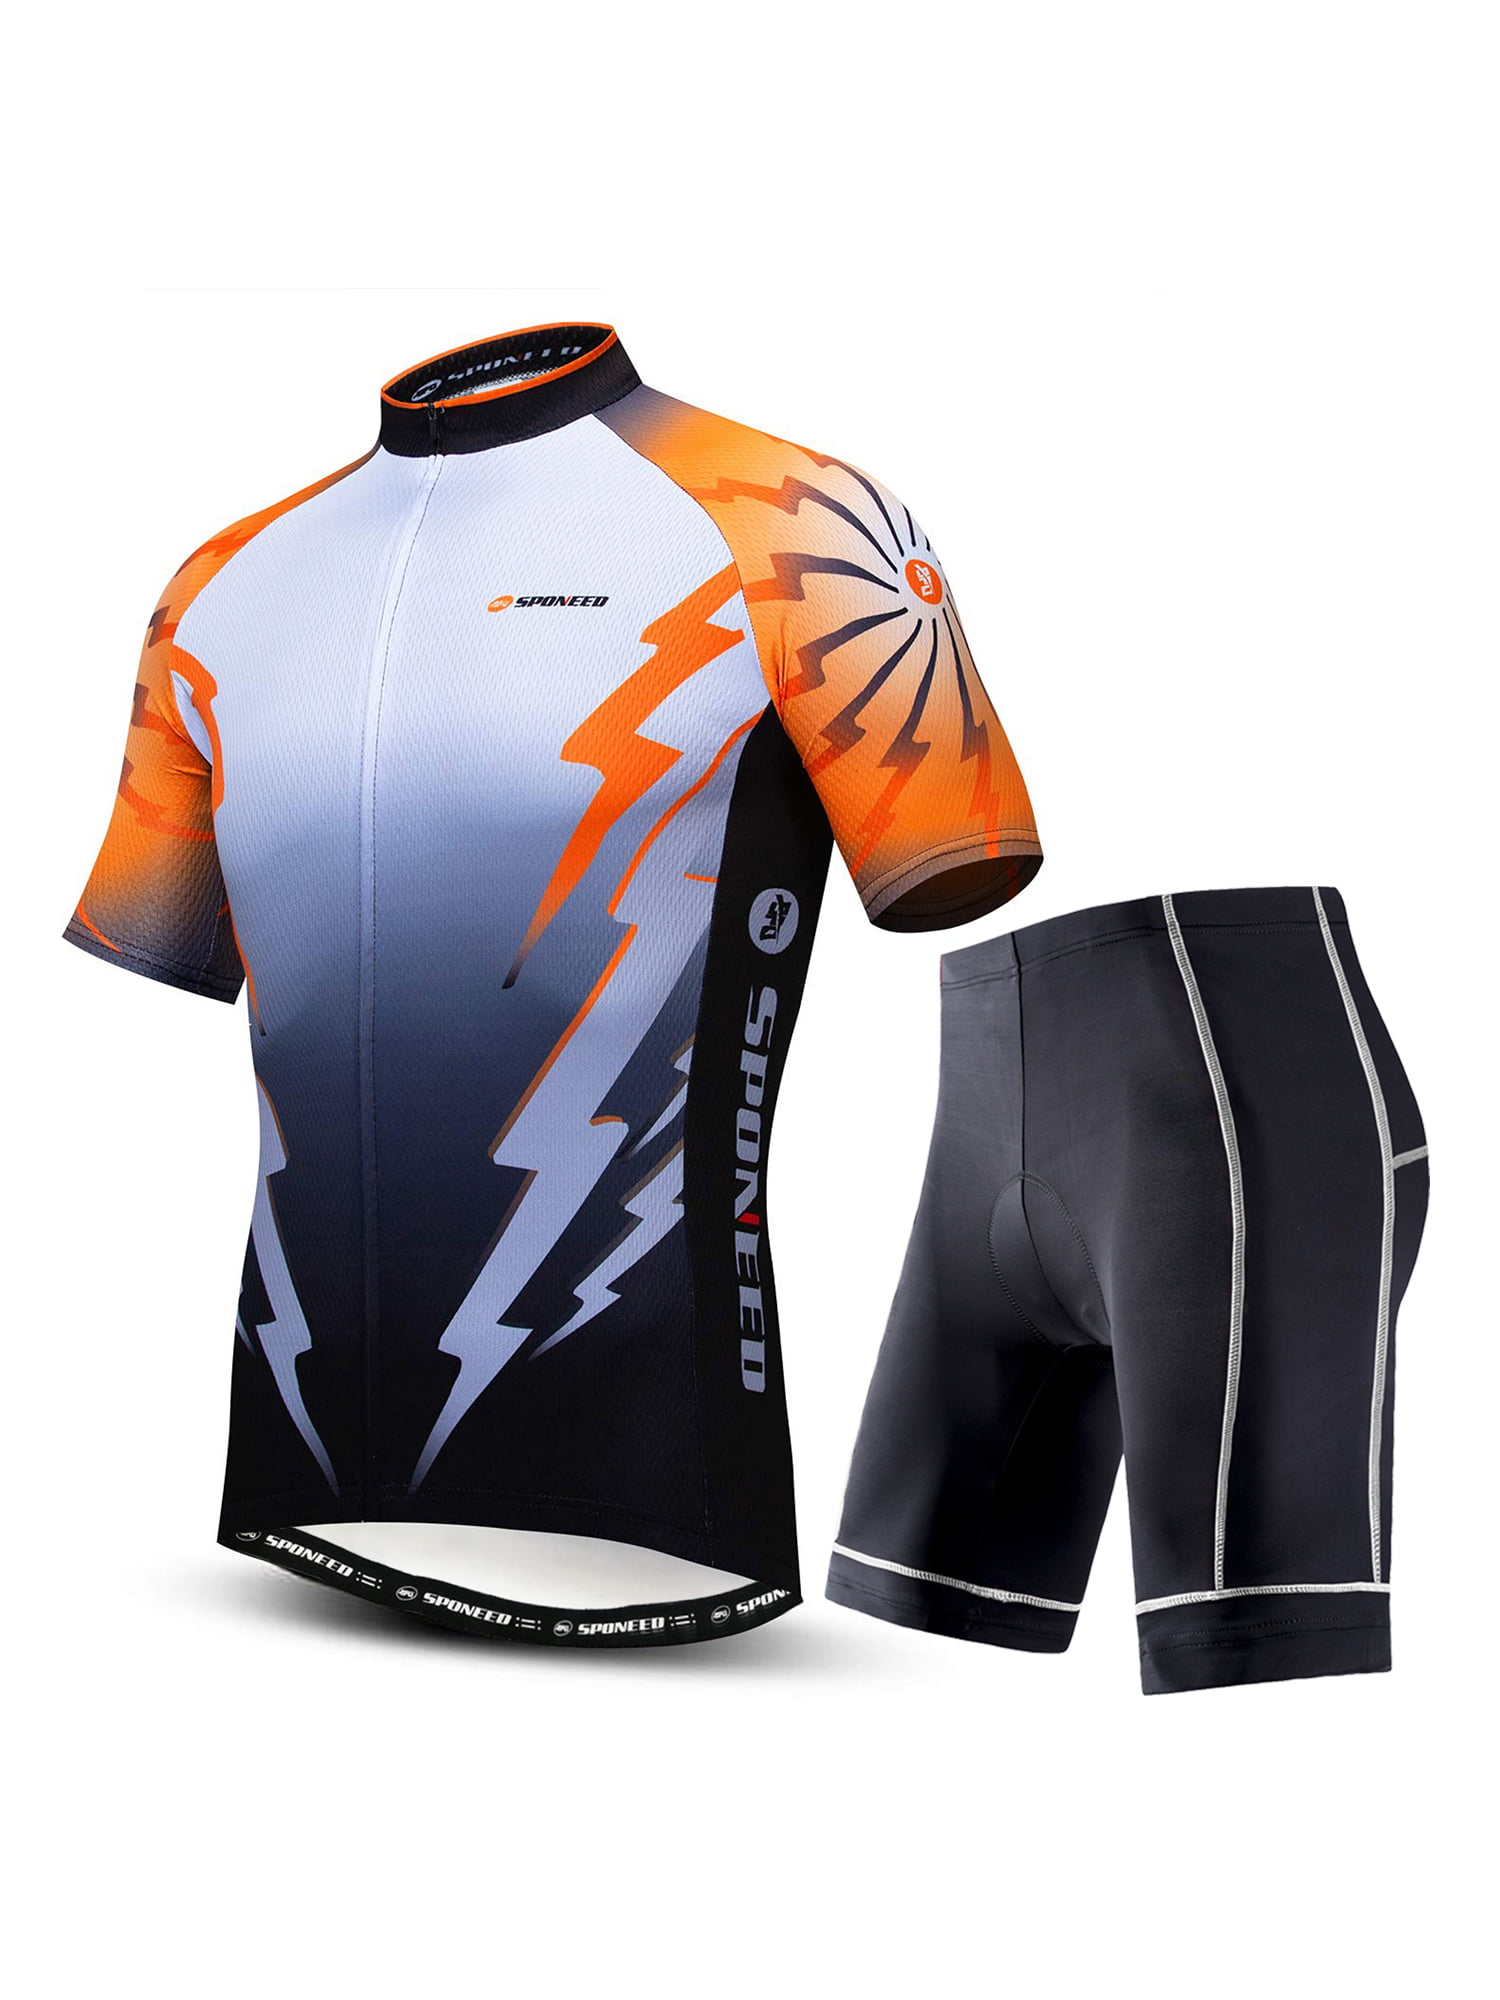 Men's Cycling Kit Bicycle Clothing Bike Jersey Top and Bib Shorts Padded Set 